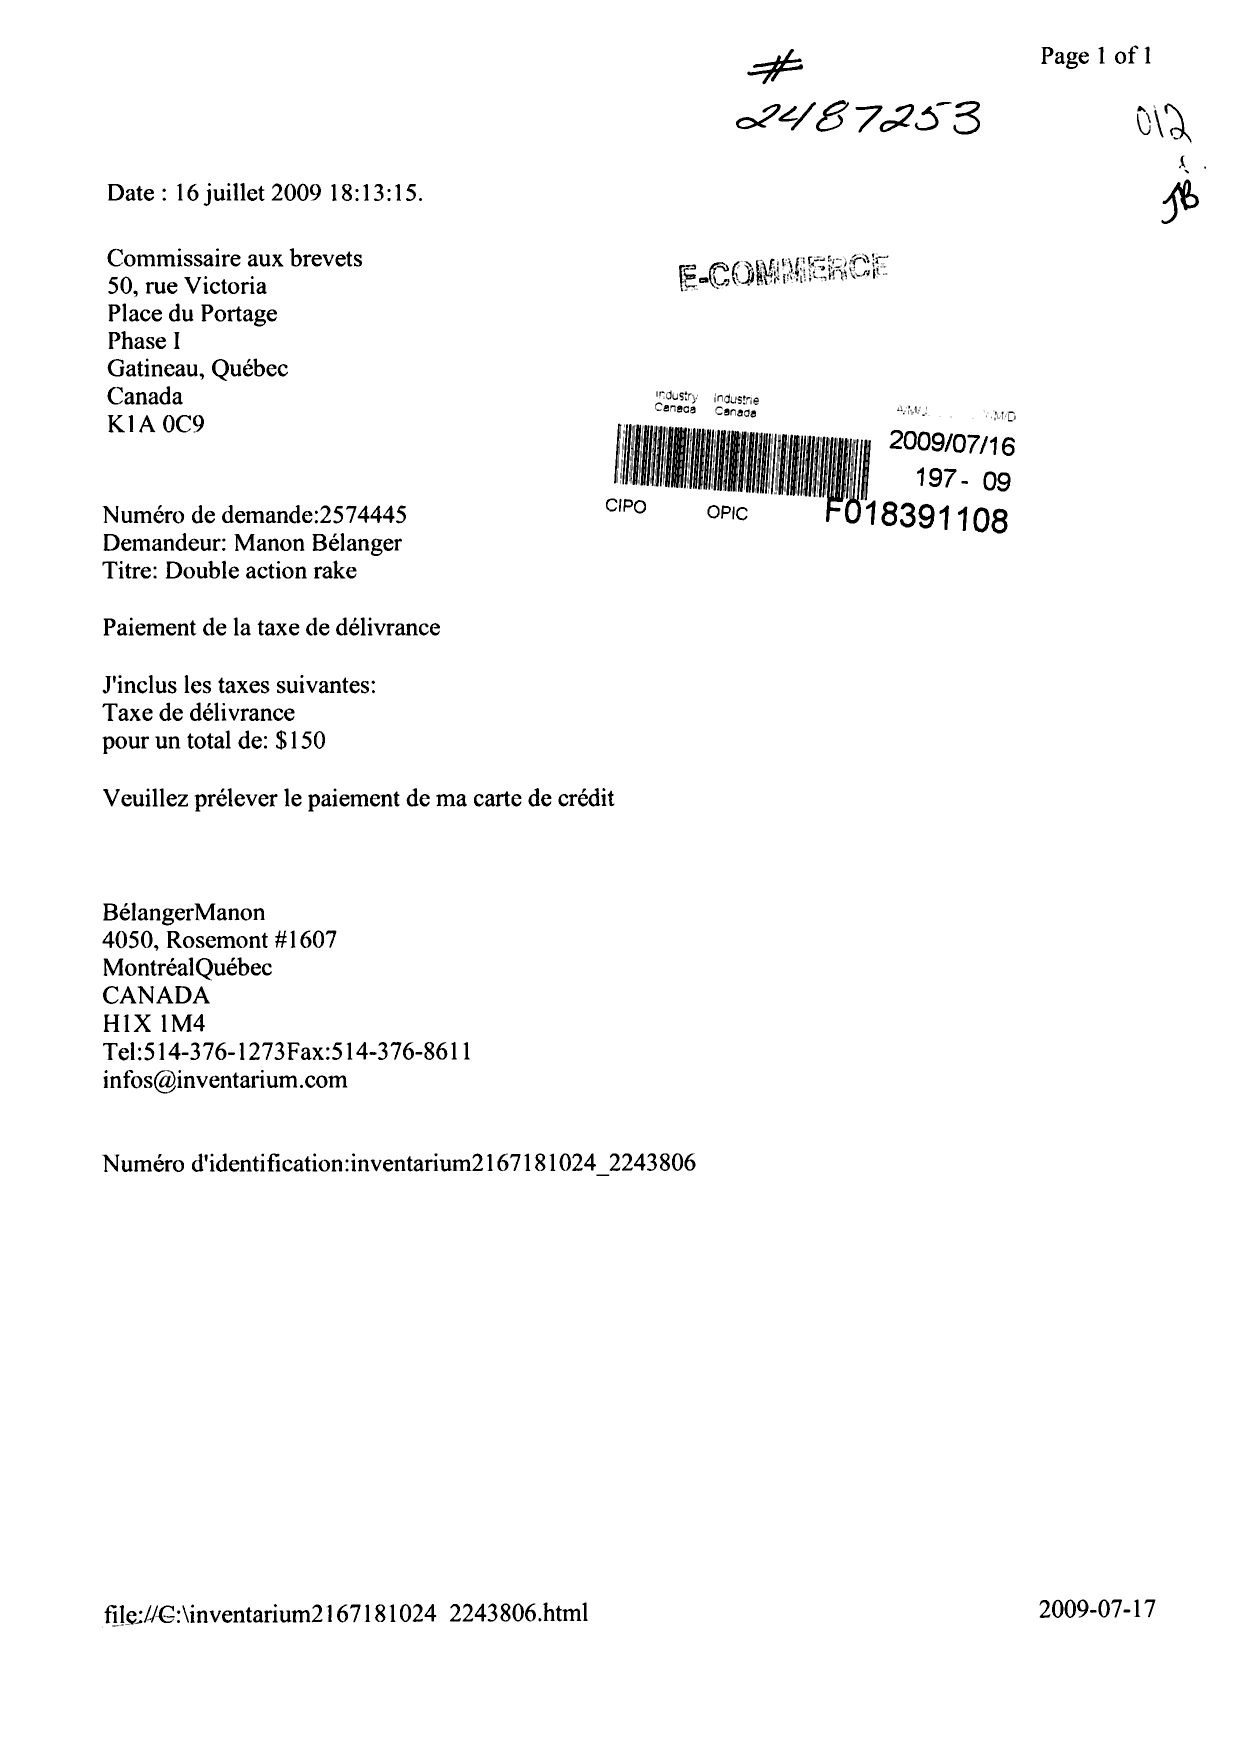 Canadian Patent Document 2574445. Correspondence 20090716. Image 1 of 1